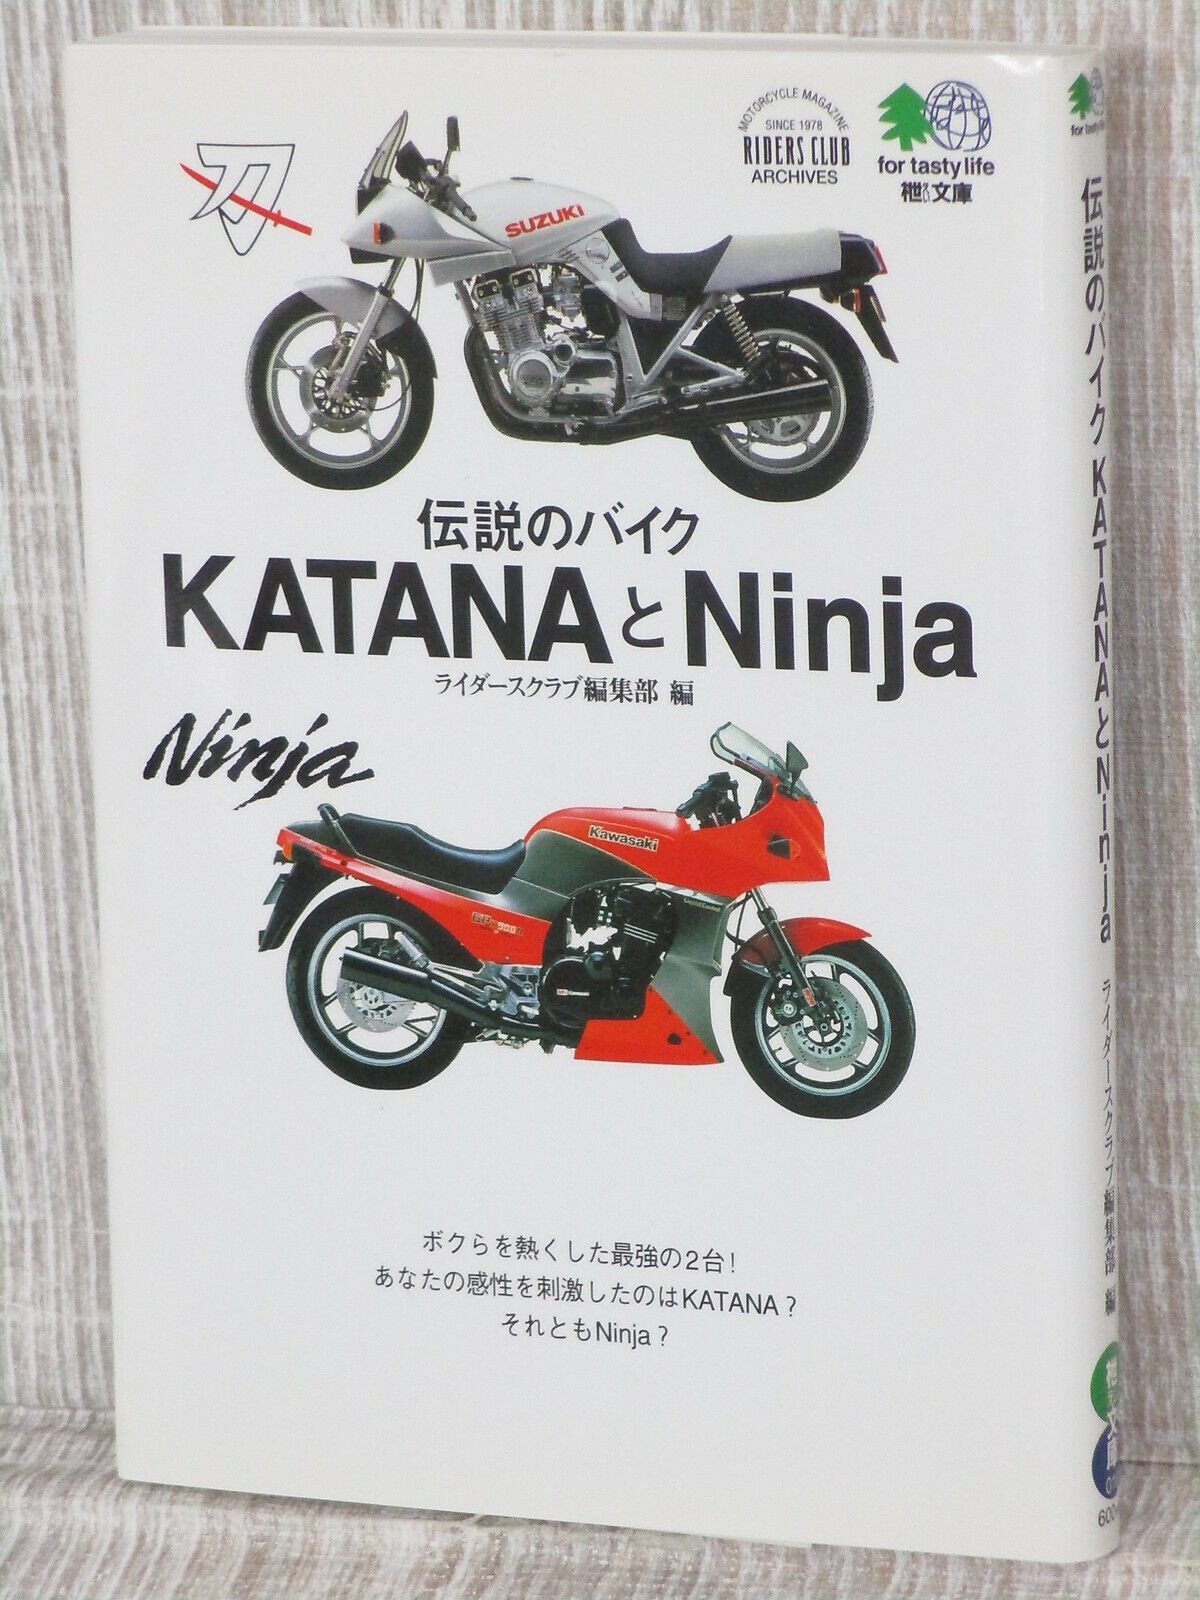 KATANA Suzuki & NINJA Kawasaki Motorcycle Art Fan Book Pictorial Japan 33